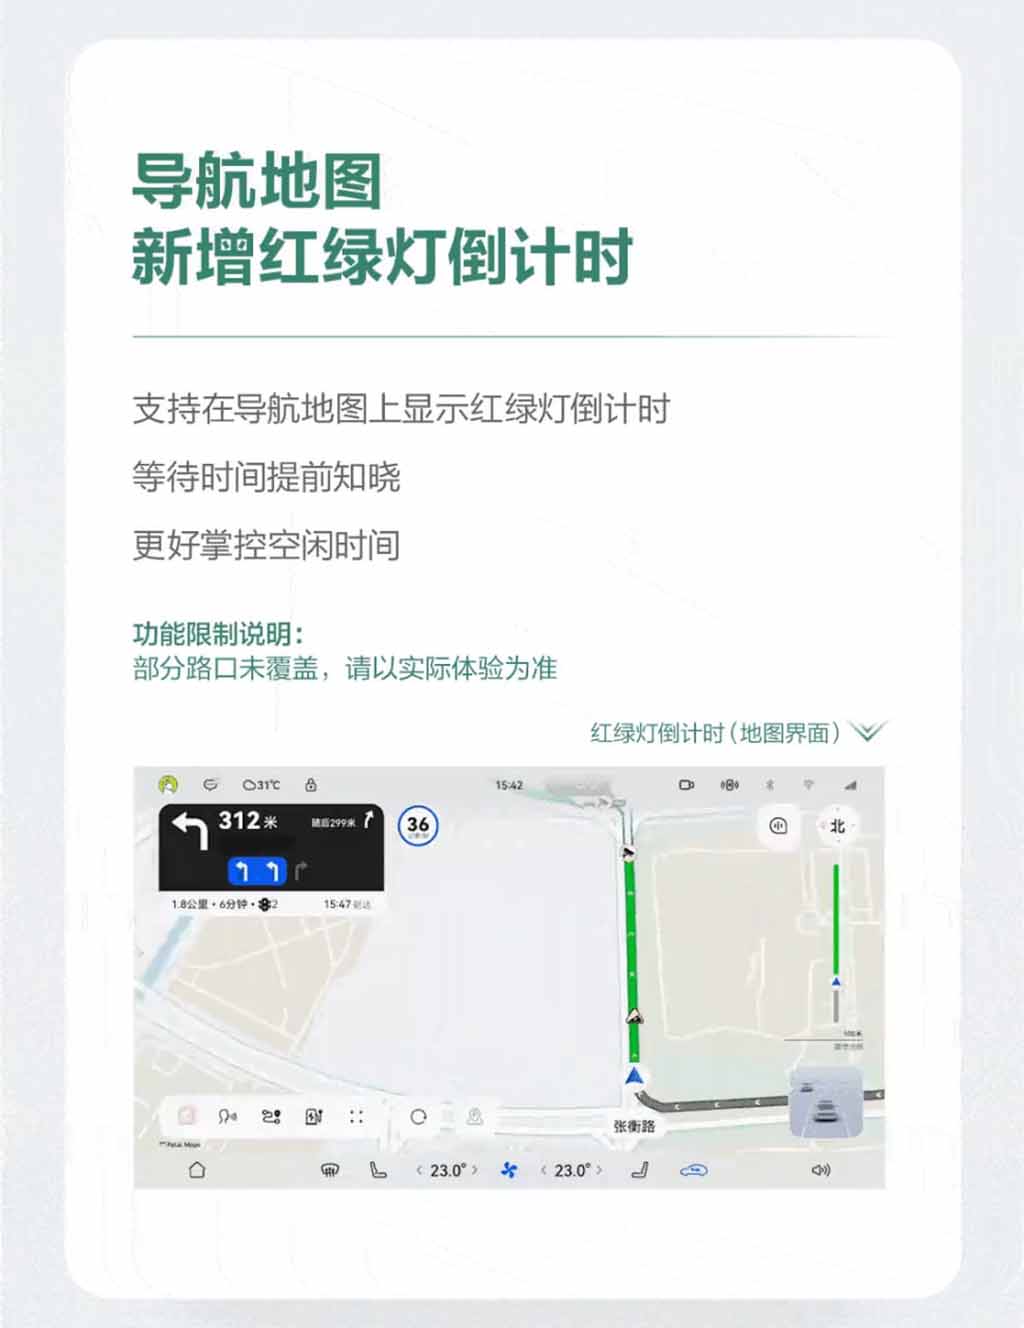 Huawei Qiankun ADS June 2024 update